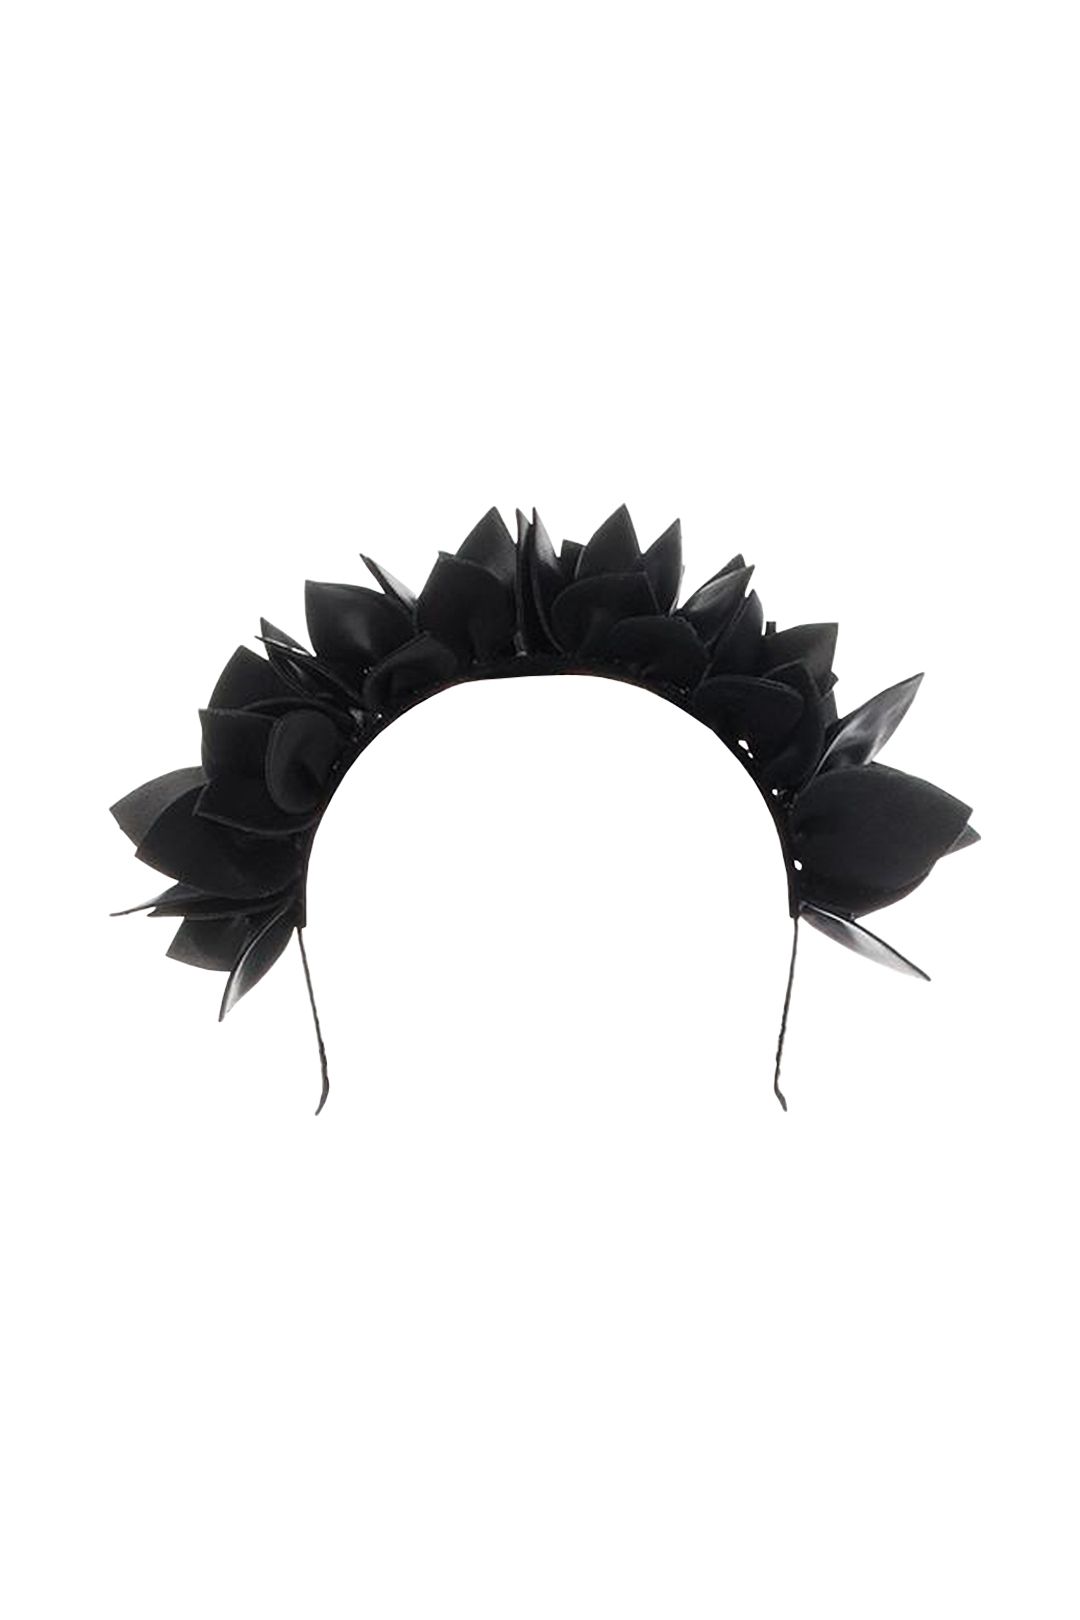 Olga Berg - Jess Floral Headband - Black - Front